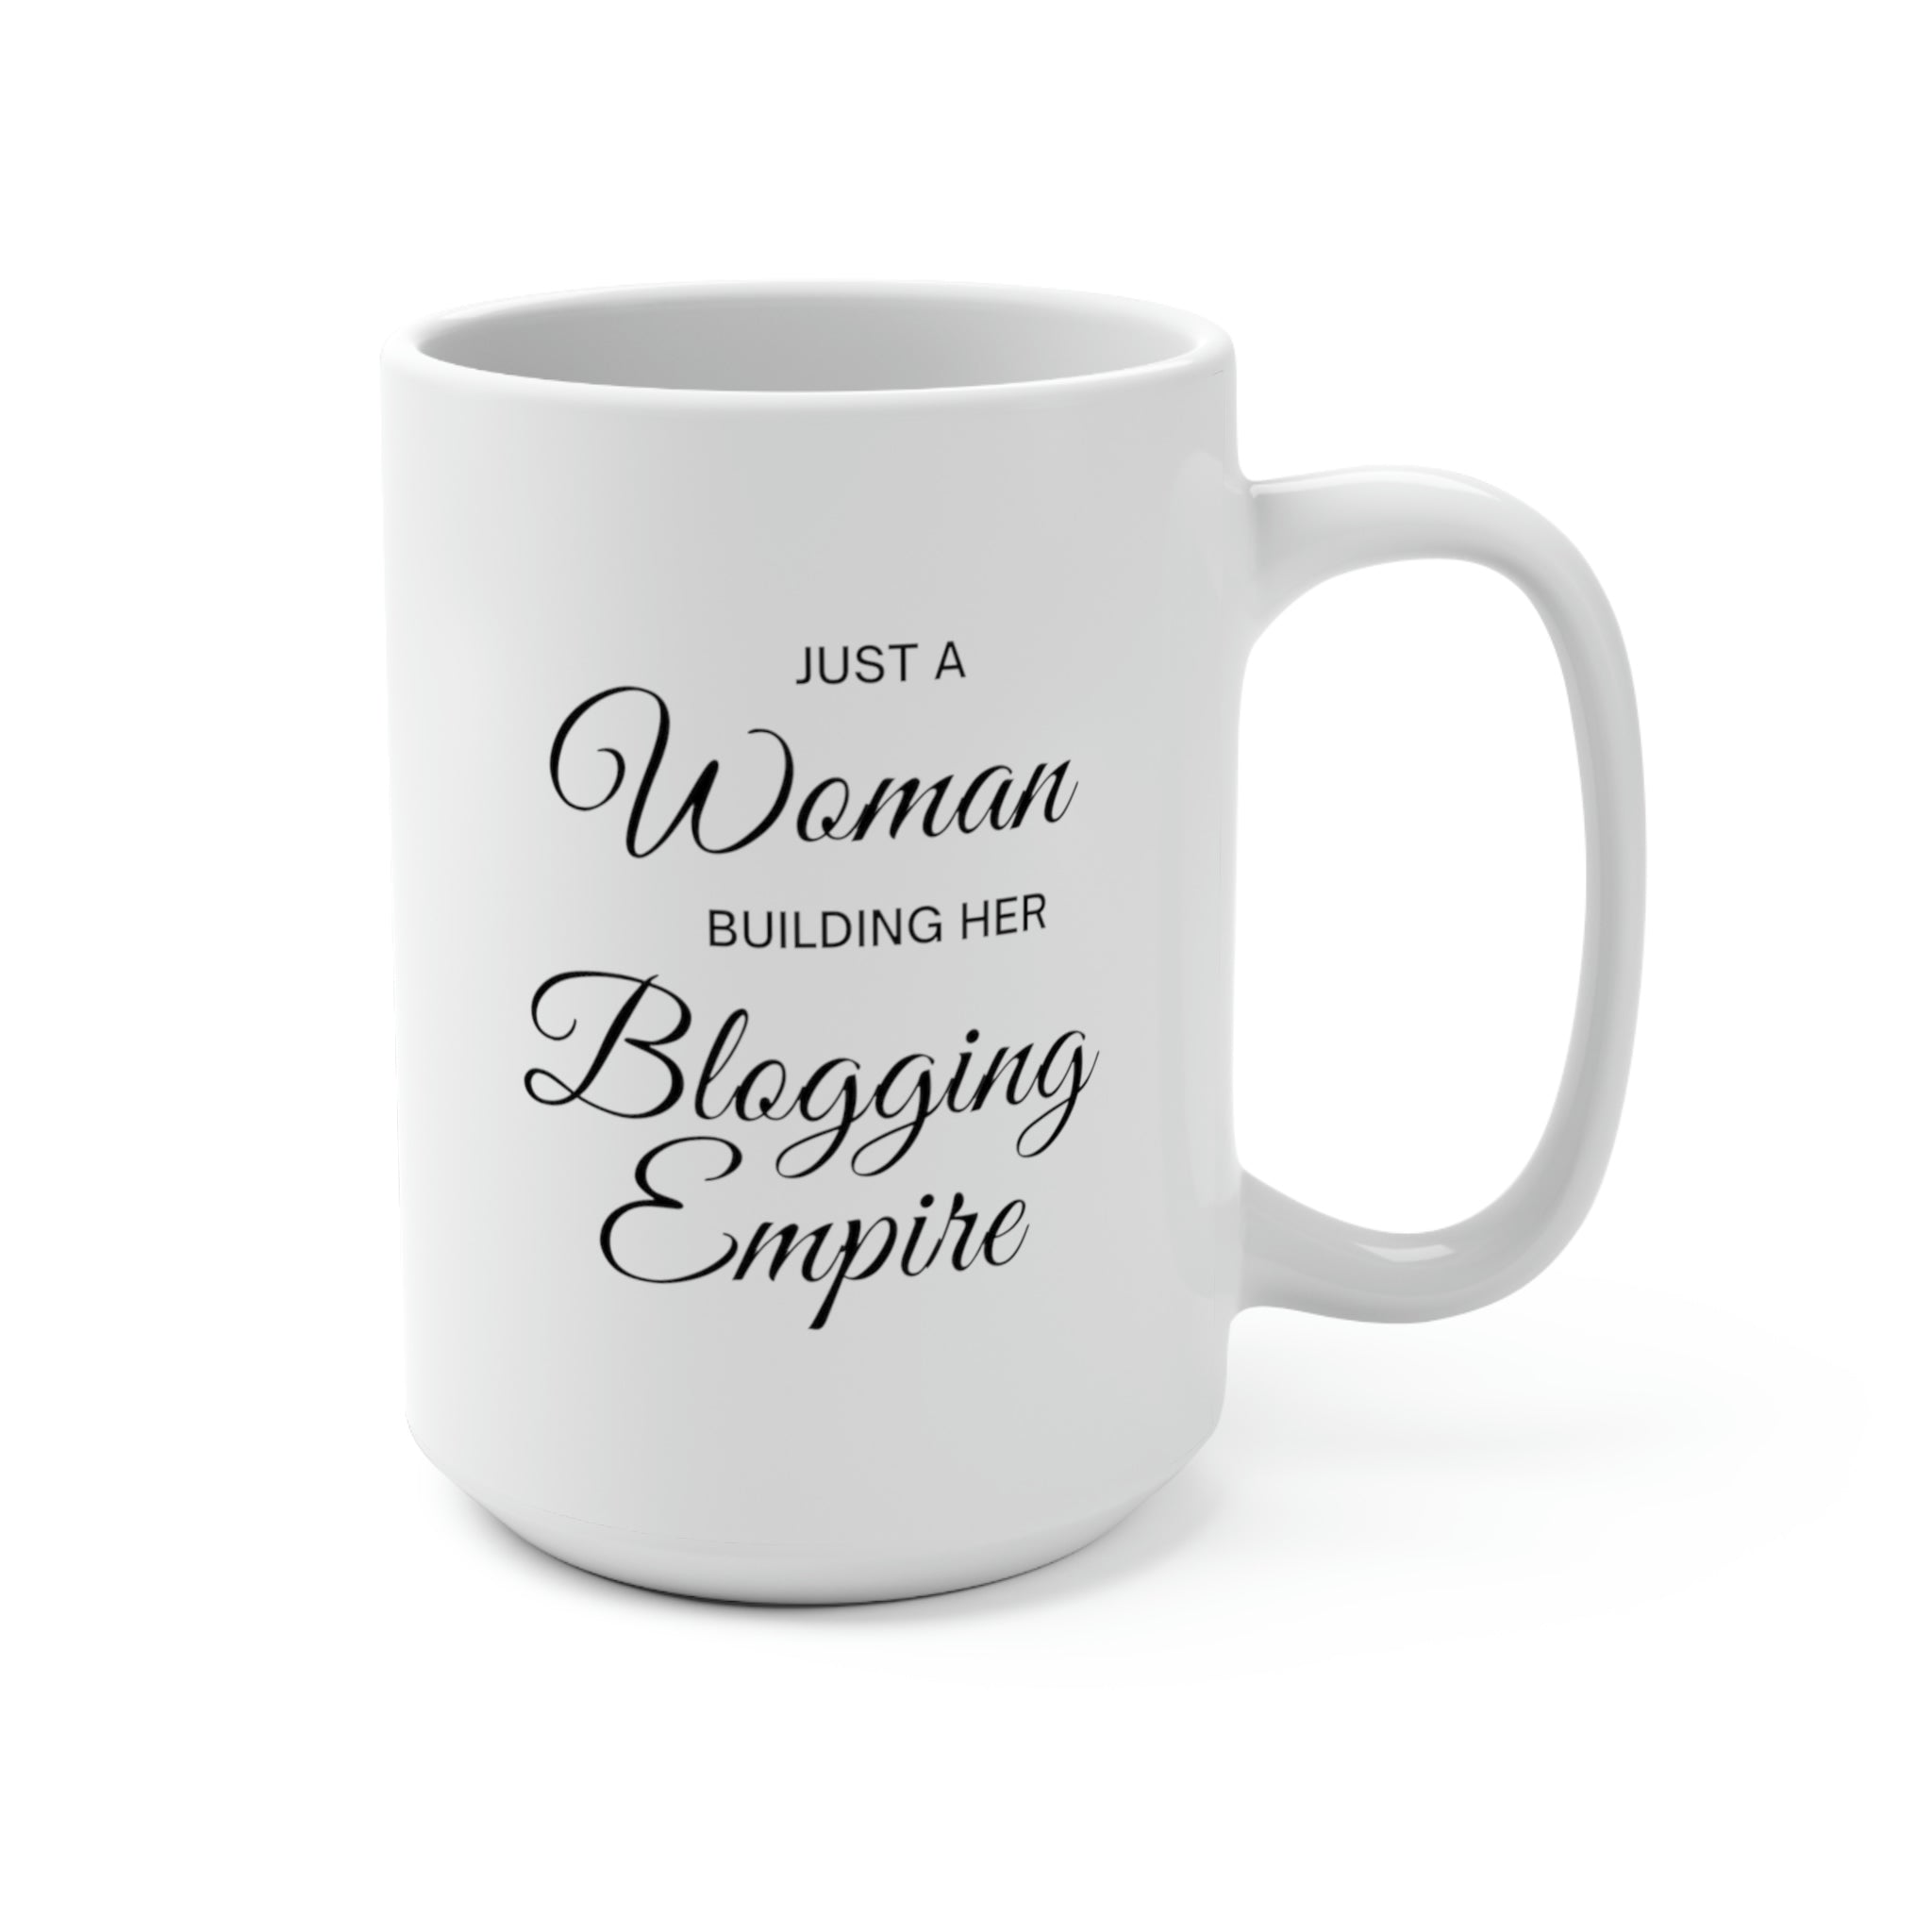 WOMAN BUILDING HER BLOGGING EMPIRE - Ceramic Coffee Mug - 15oz